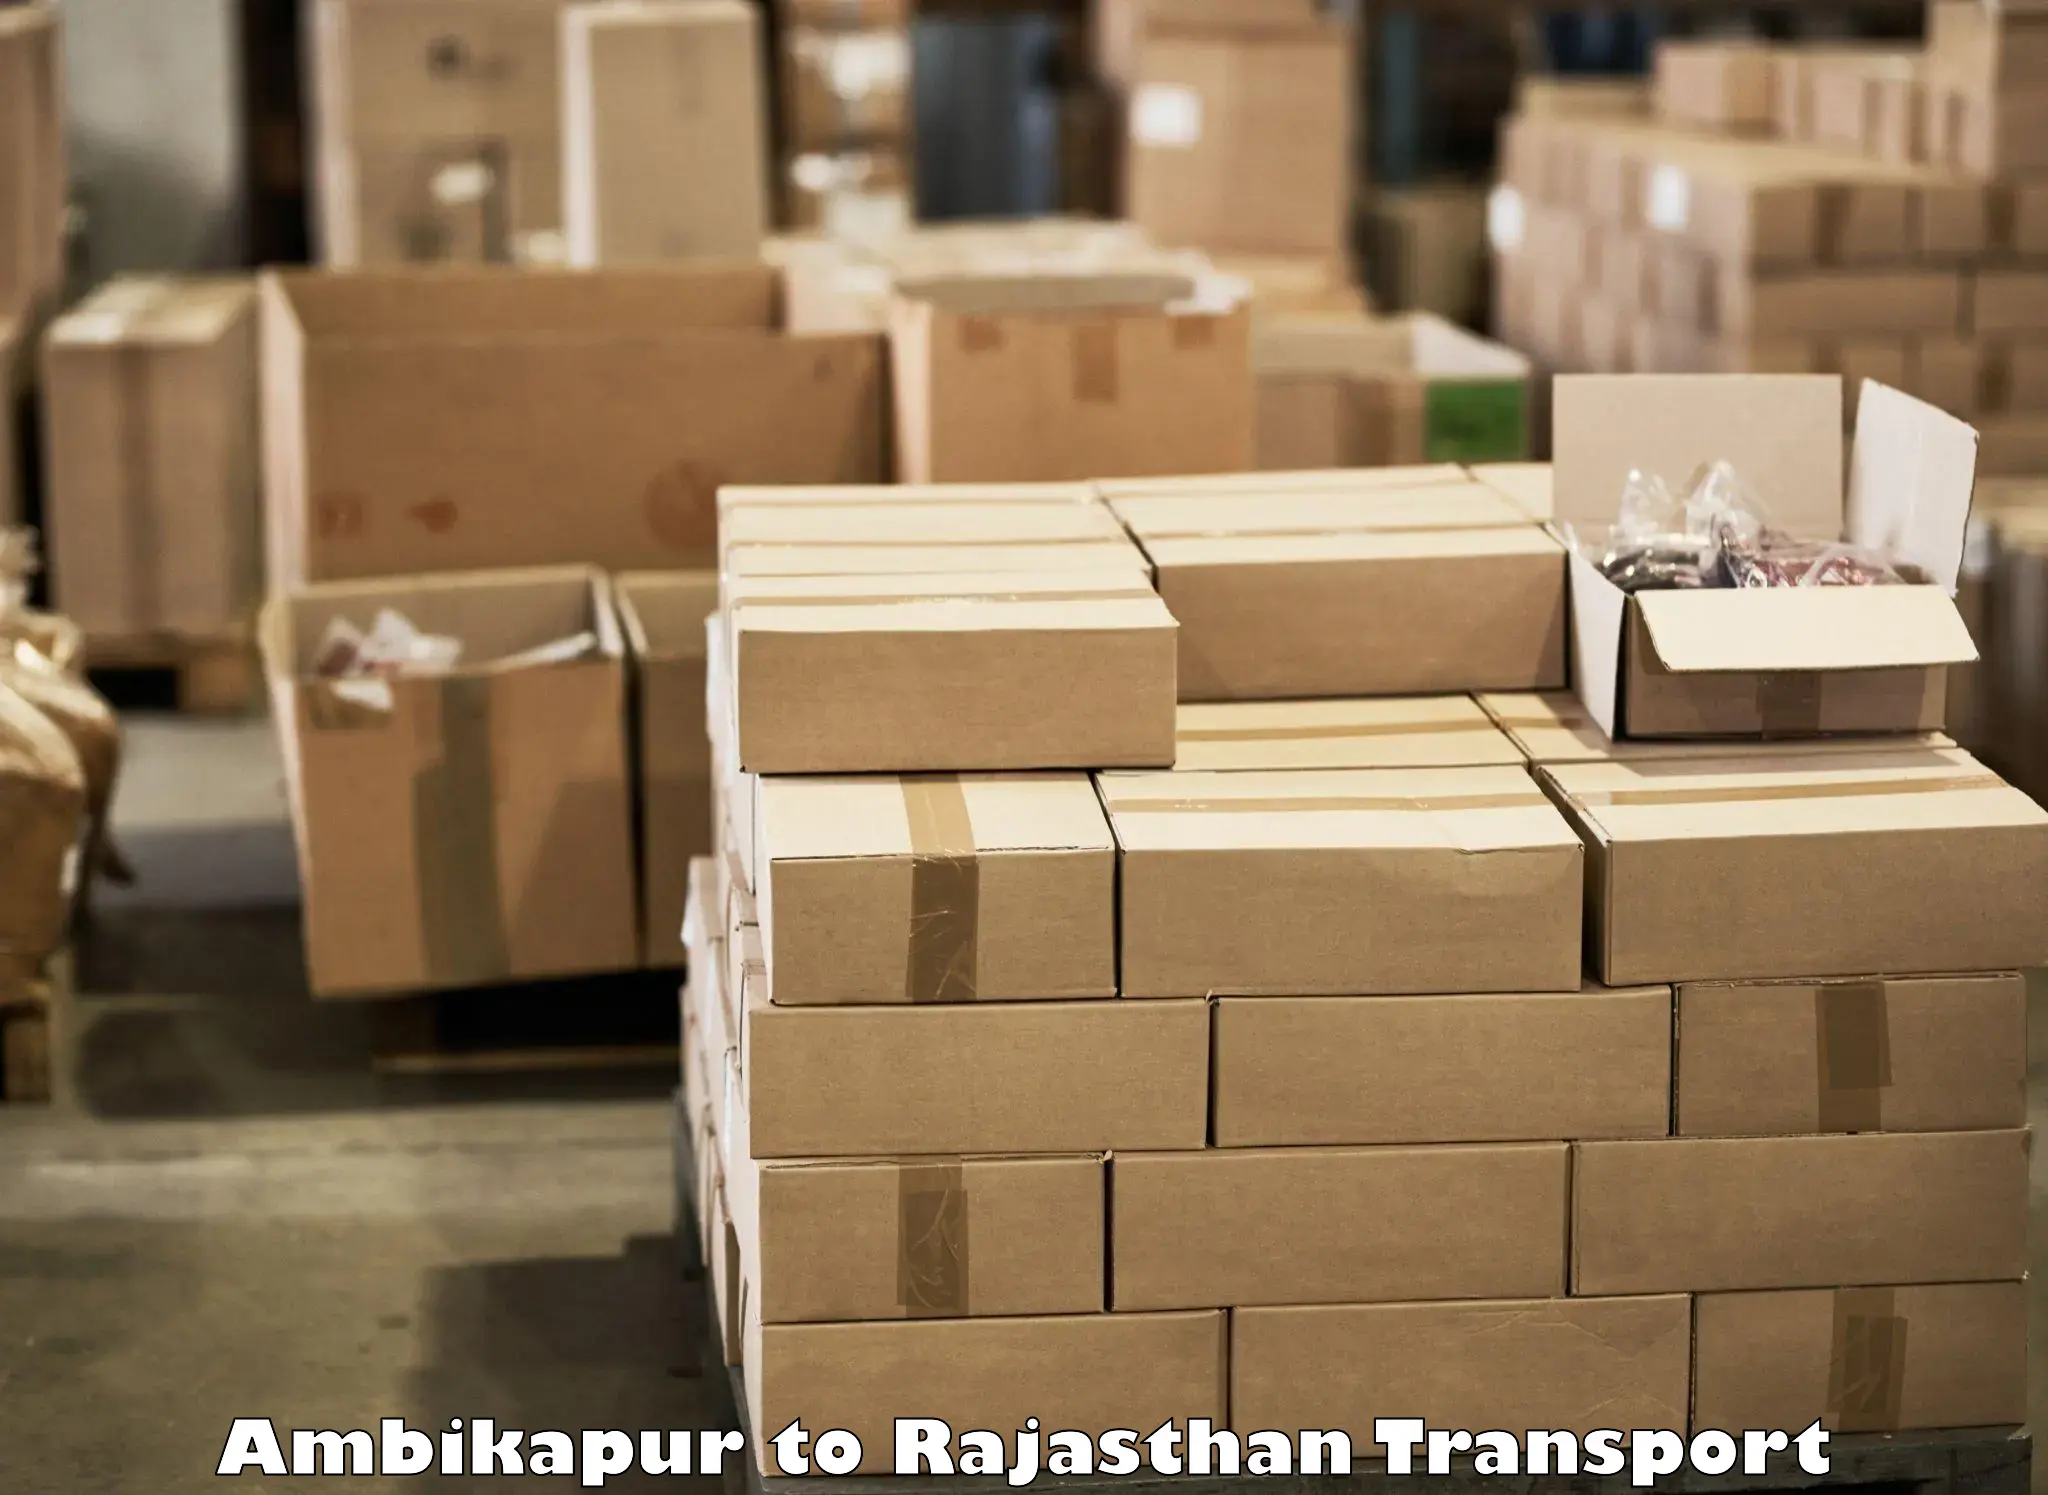 Shipping partner Ambikapur to Bhiwadi